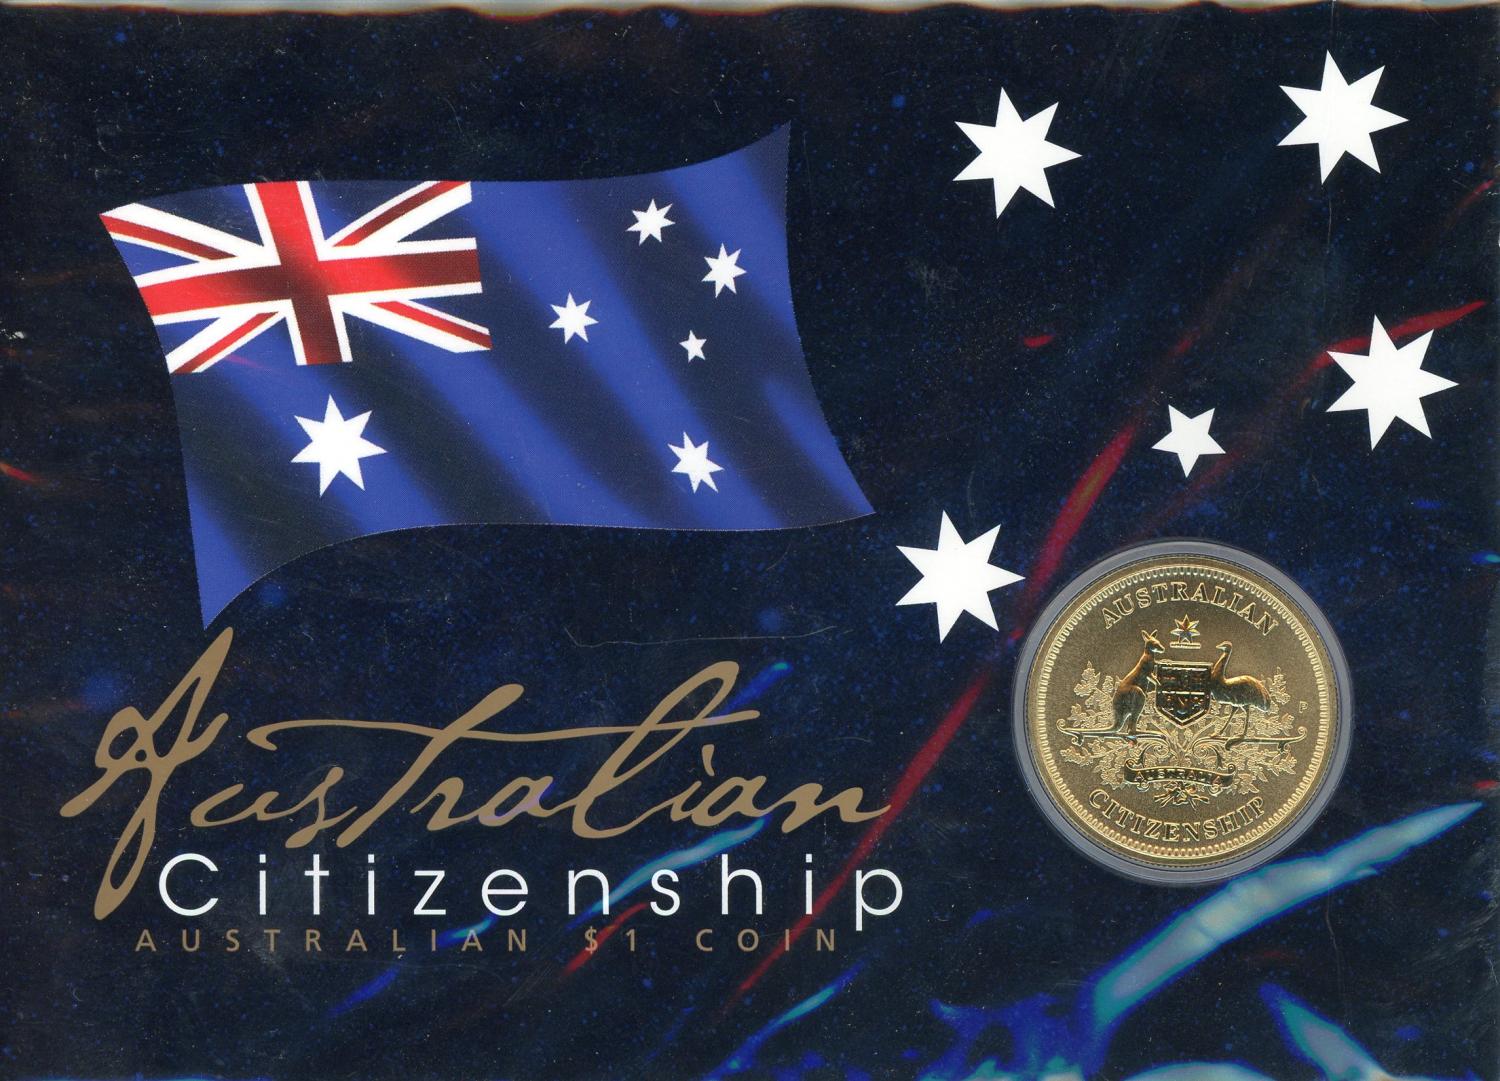 Thumbnail for 2018 Australian $1 Coin - Australian Citizenship P Mintmark